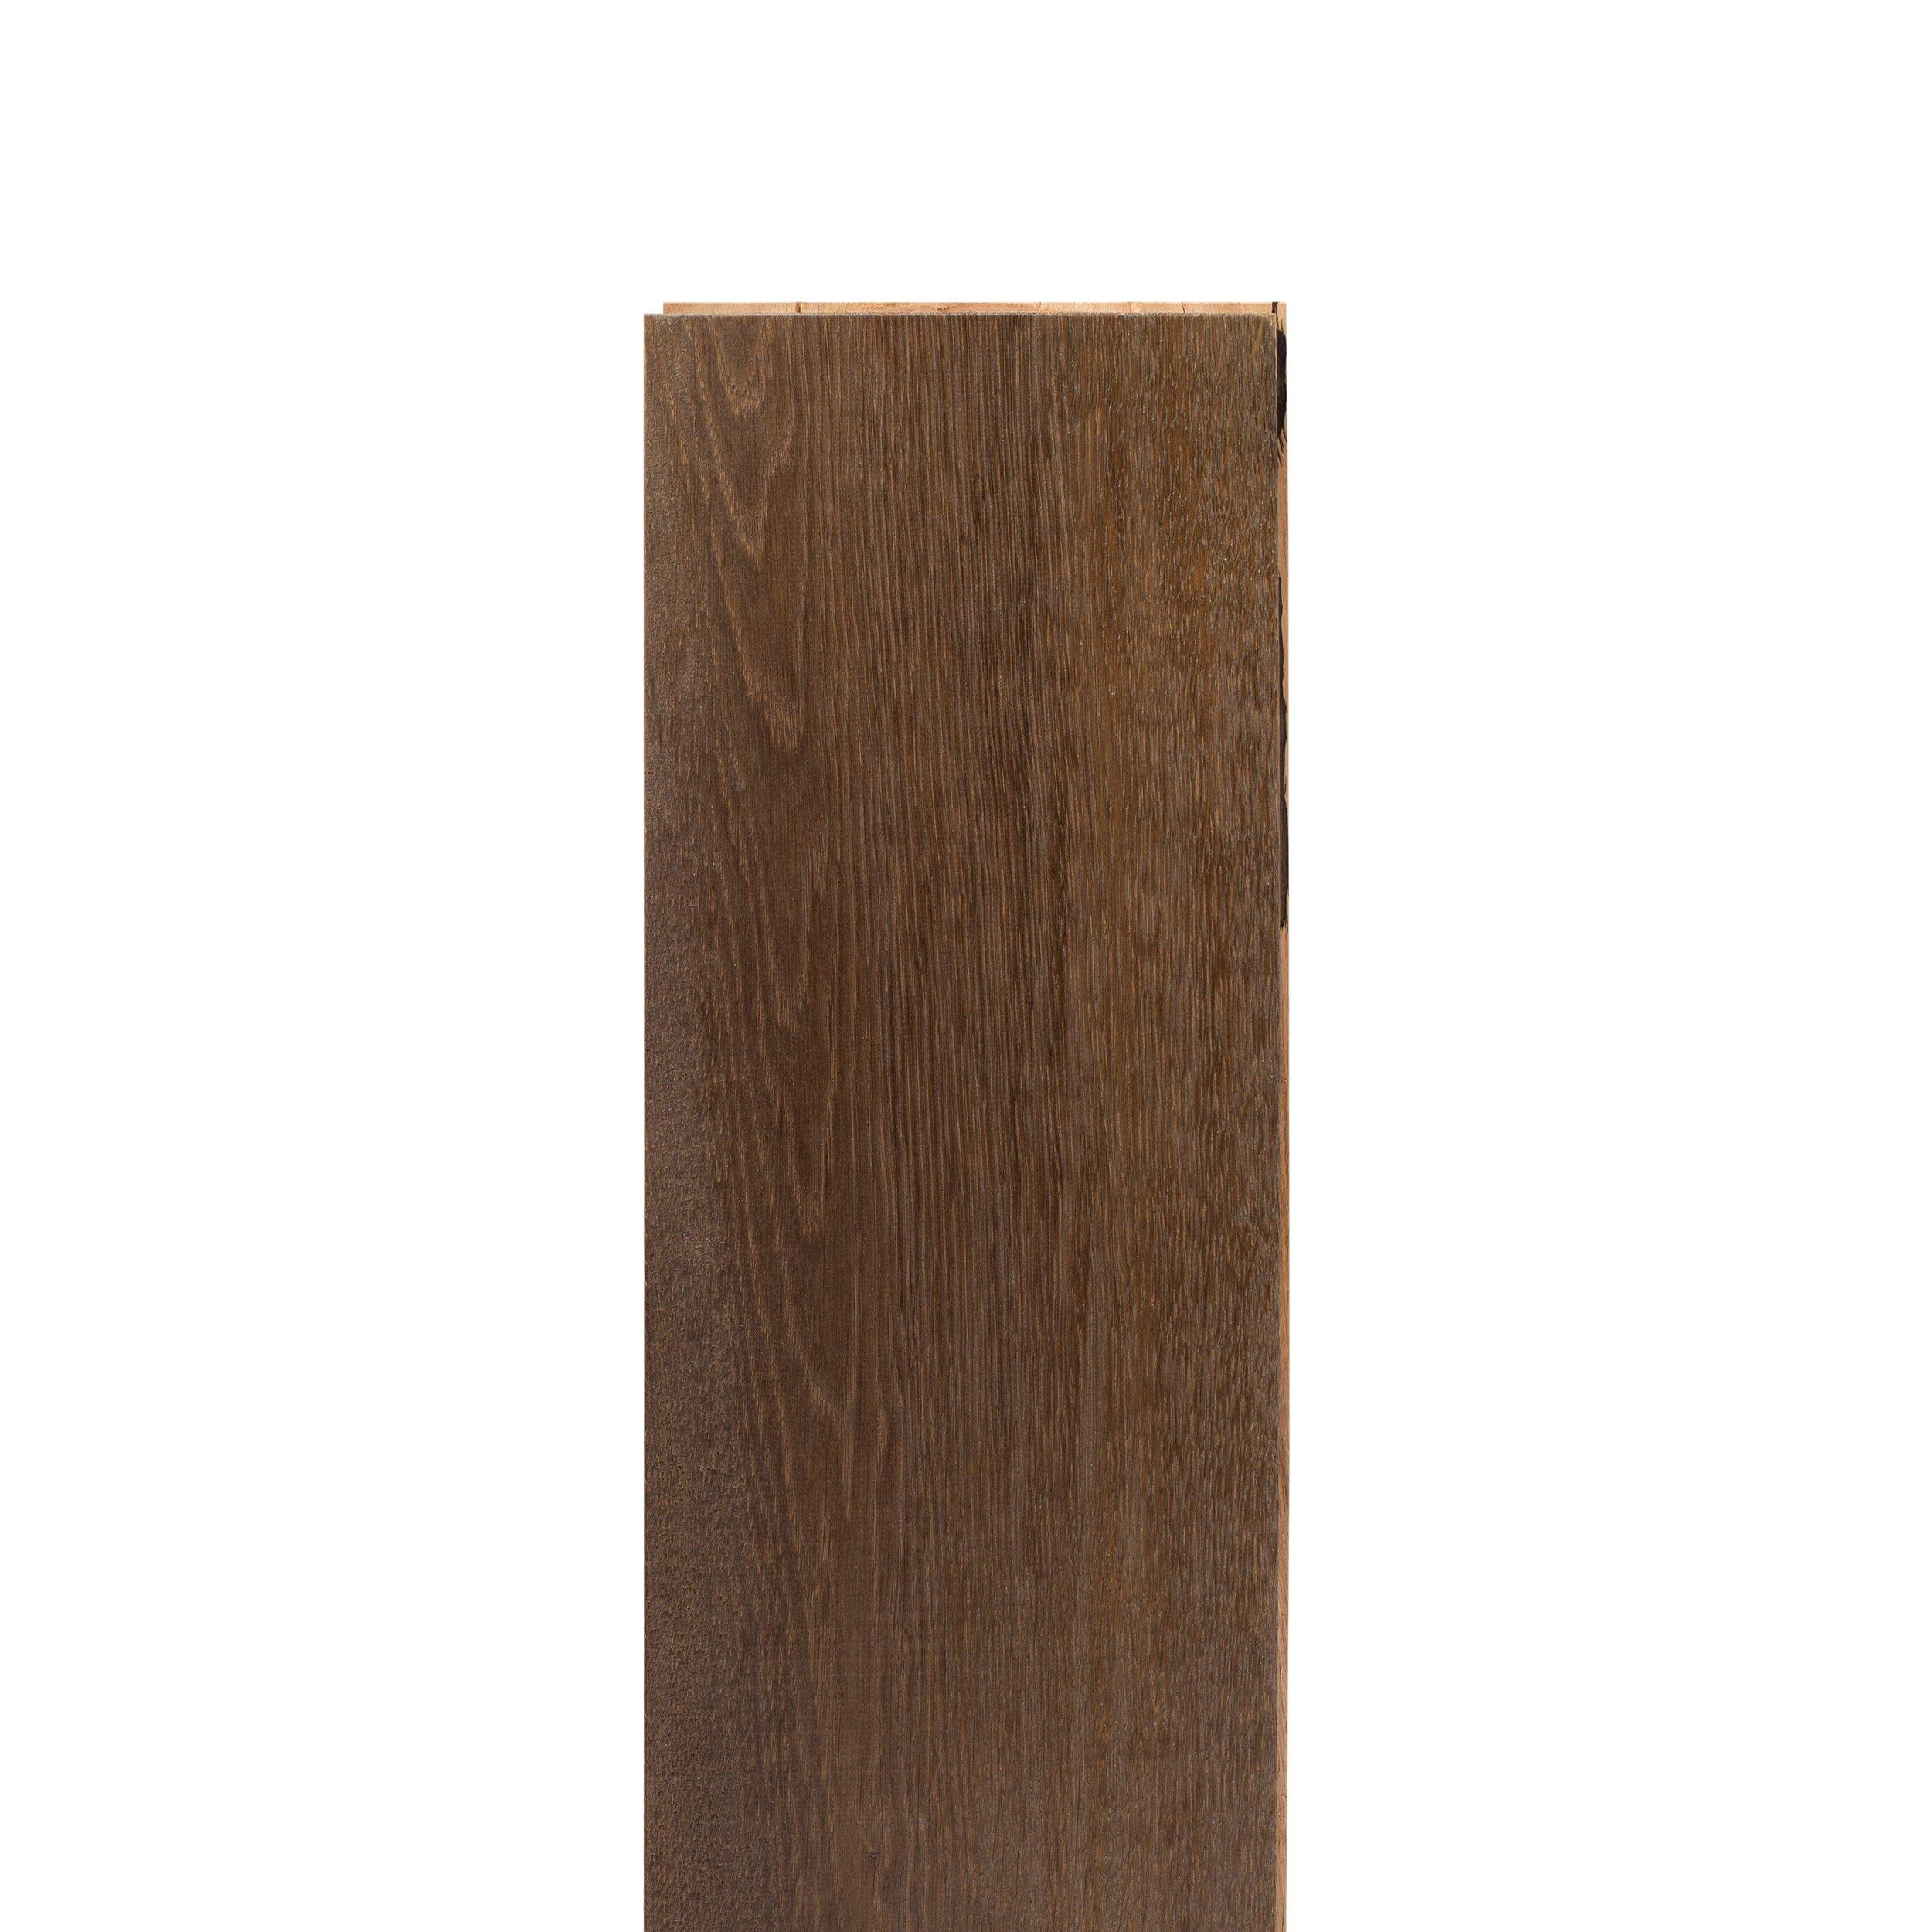 Lawrence White Oak Distressed Engineered Hardwood